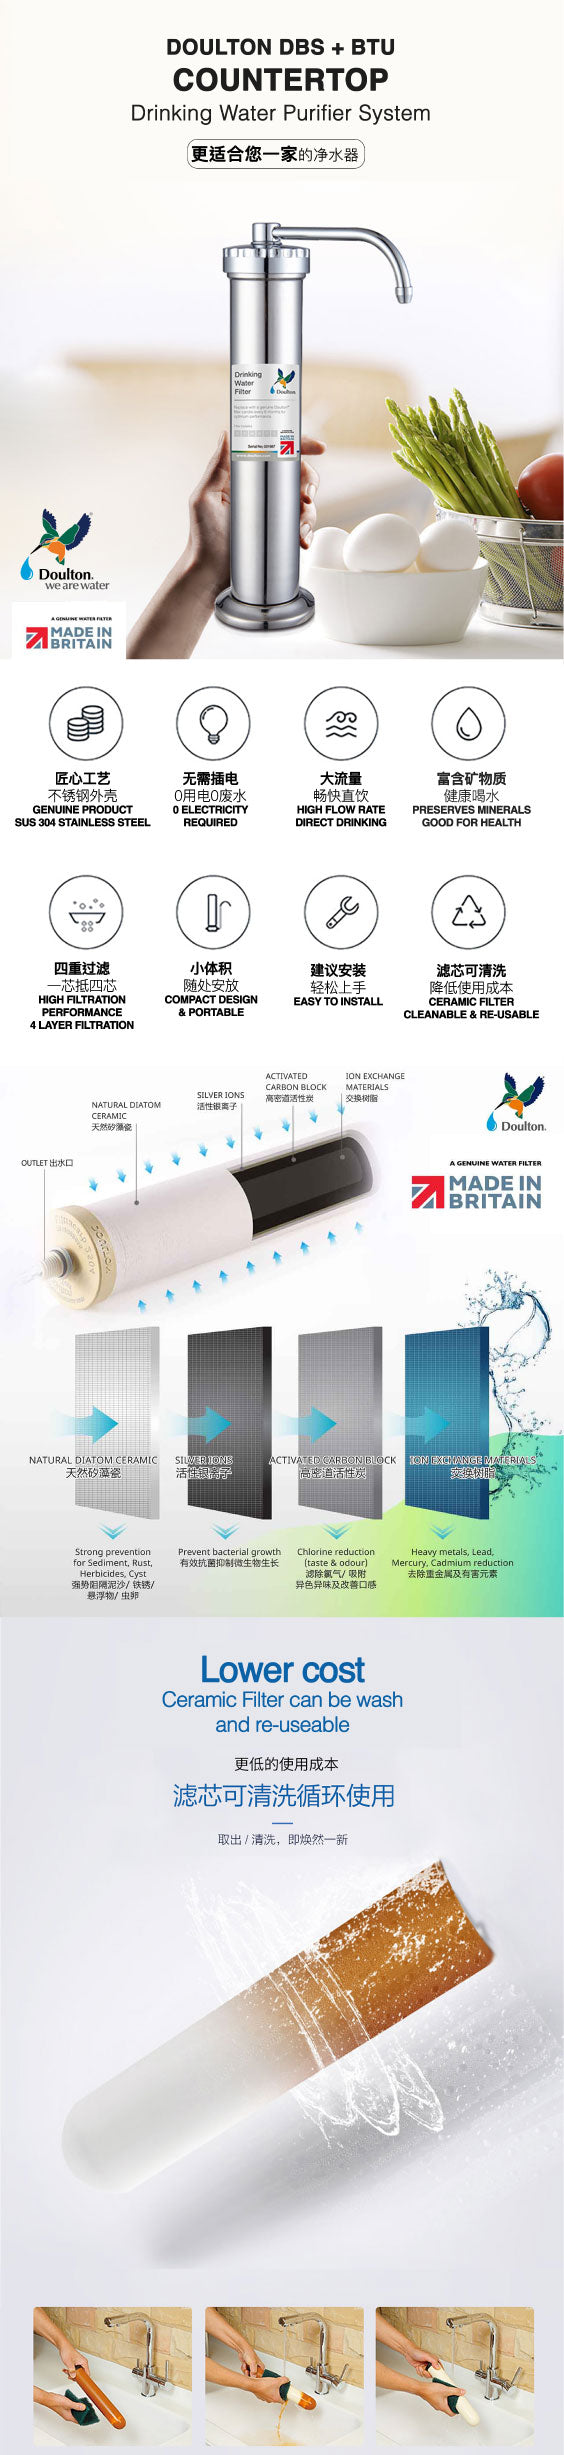 Doulton DBS+BTU - Doulton Water Purifier, Sole Distributor (MY) - Britain Premium Brand Since 1826